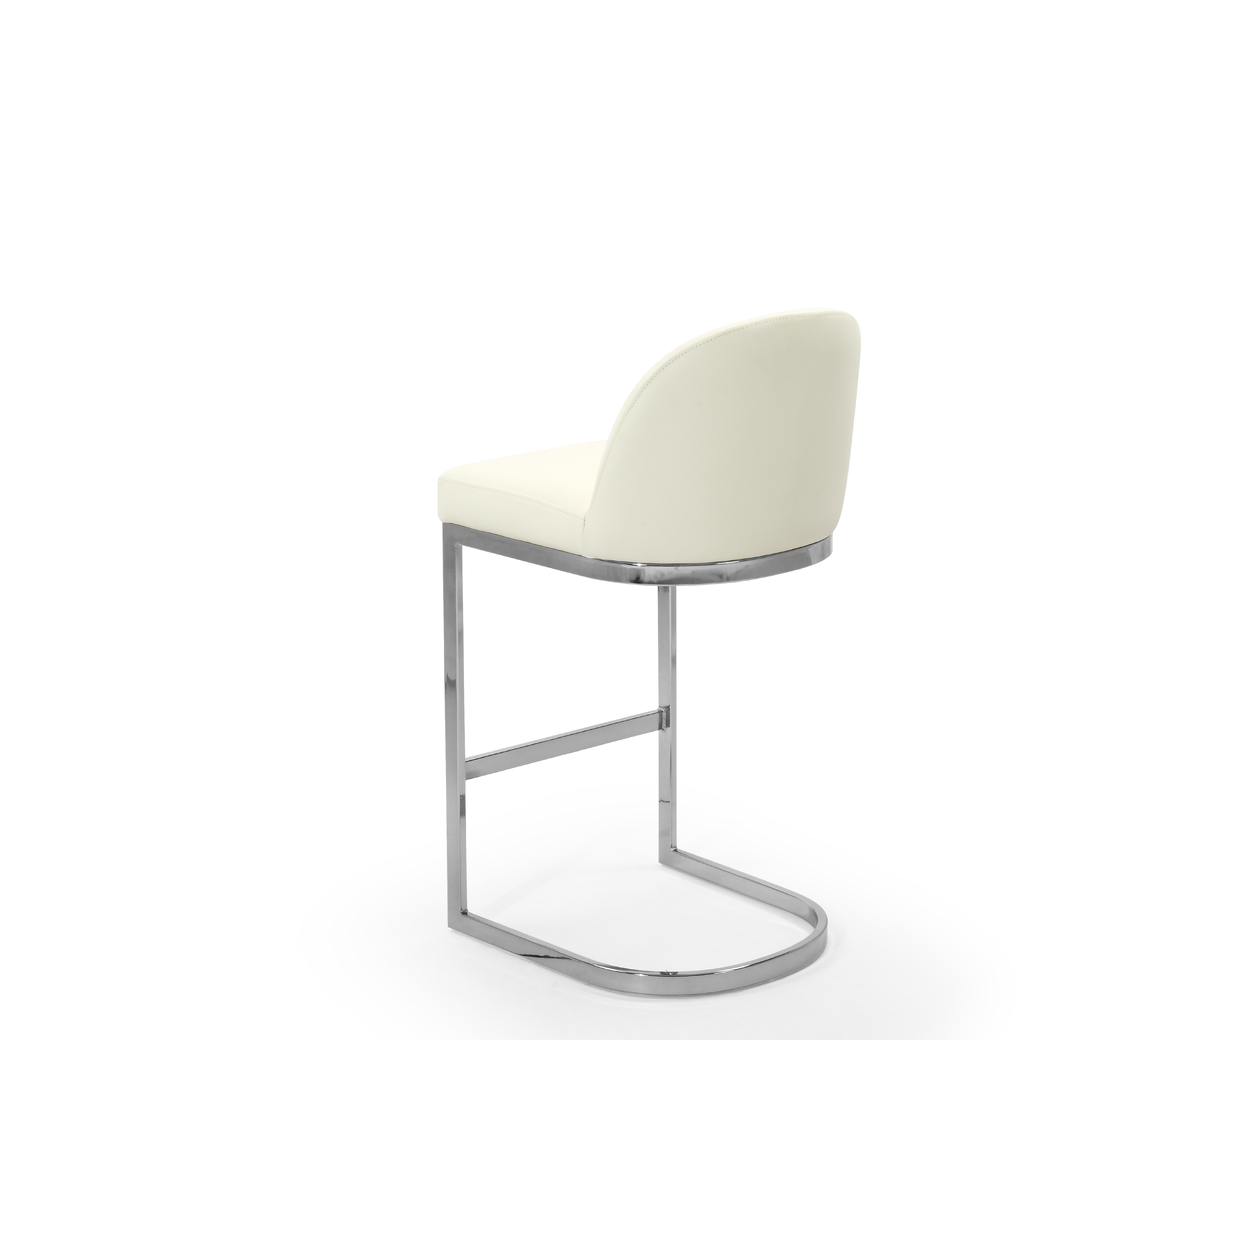 Iconic Home Liana Bar Stool Chair PU Leather Upholstered Armless Design Half-Moon Chrome Plated Solid Metal U-Shaped Base - Cream